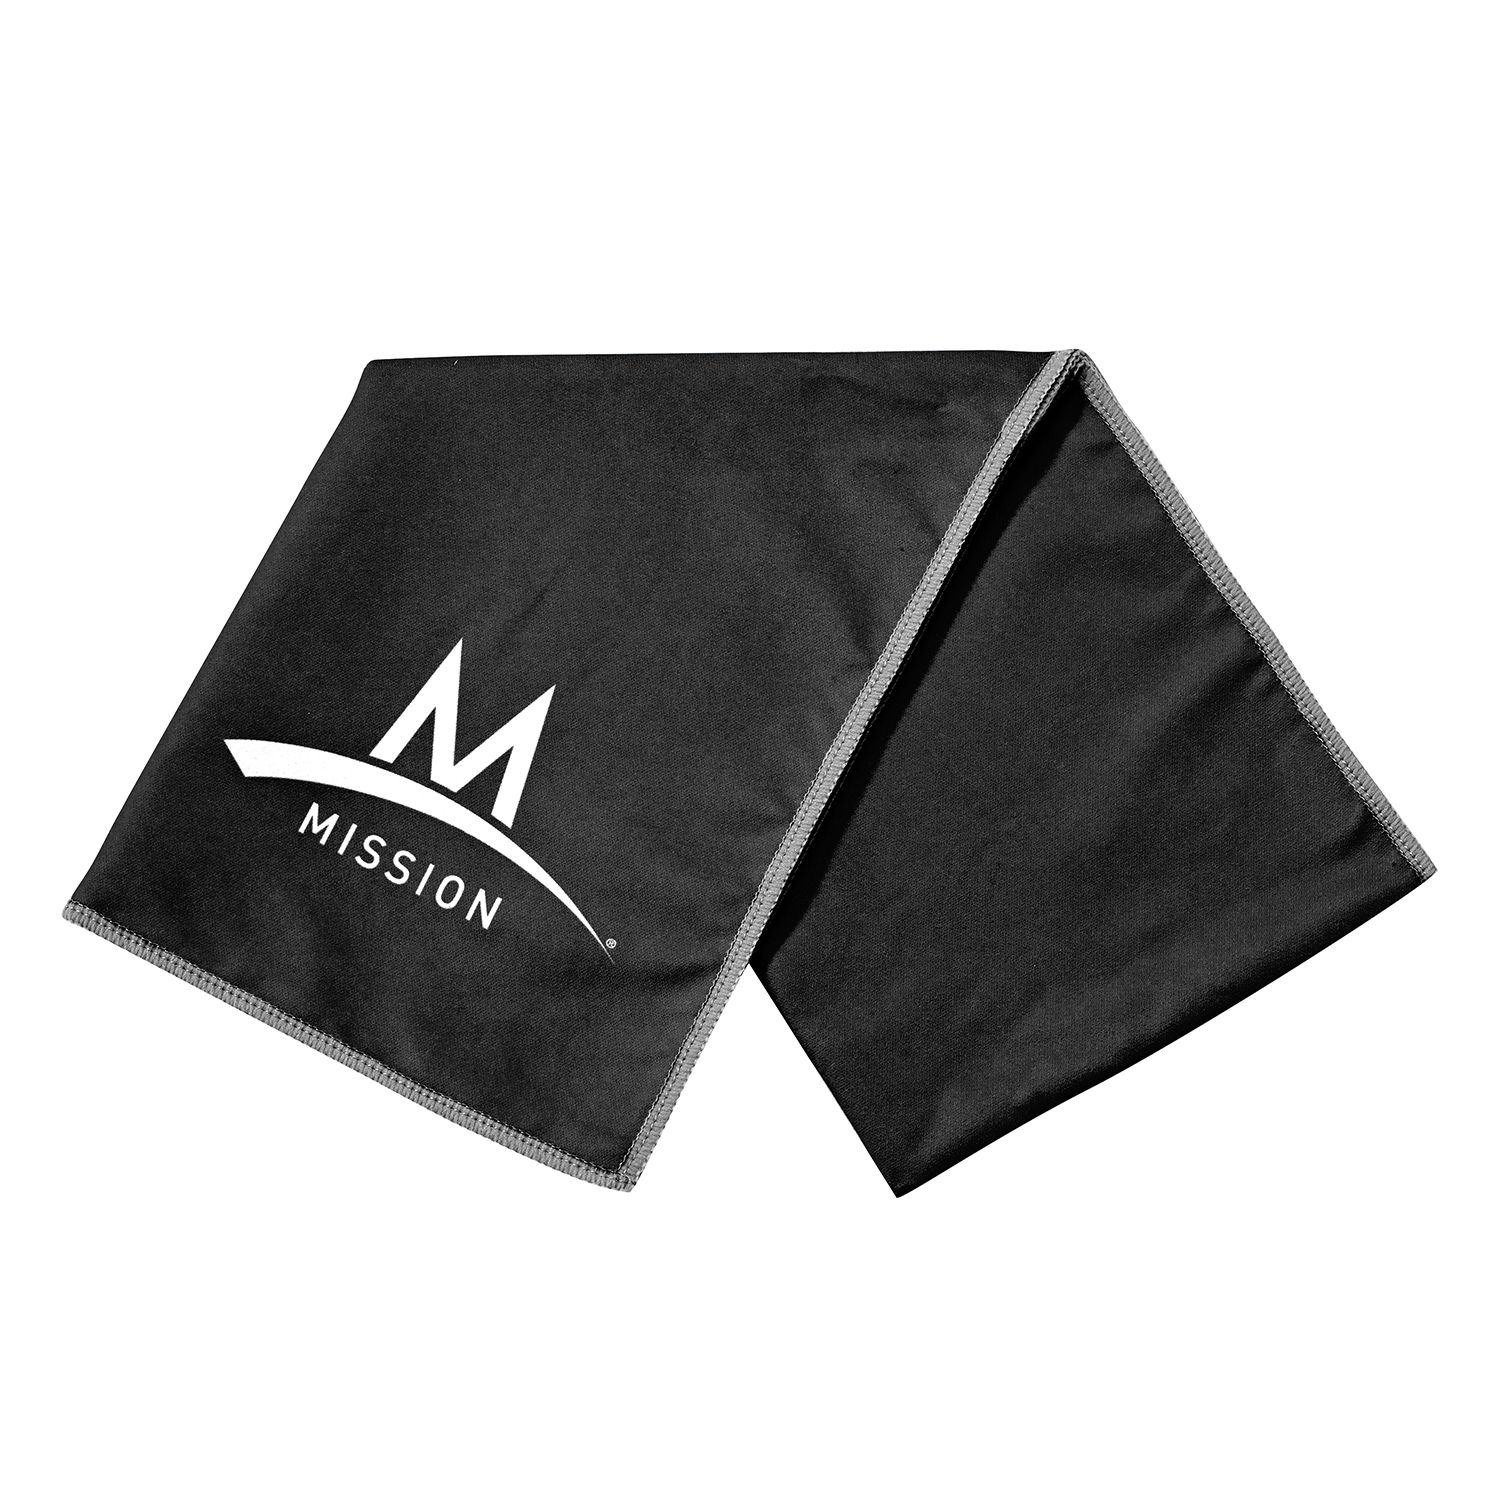 mission athletecare cooling towel